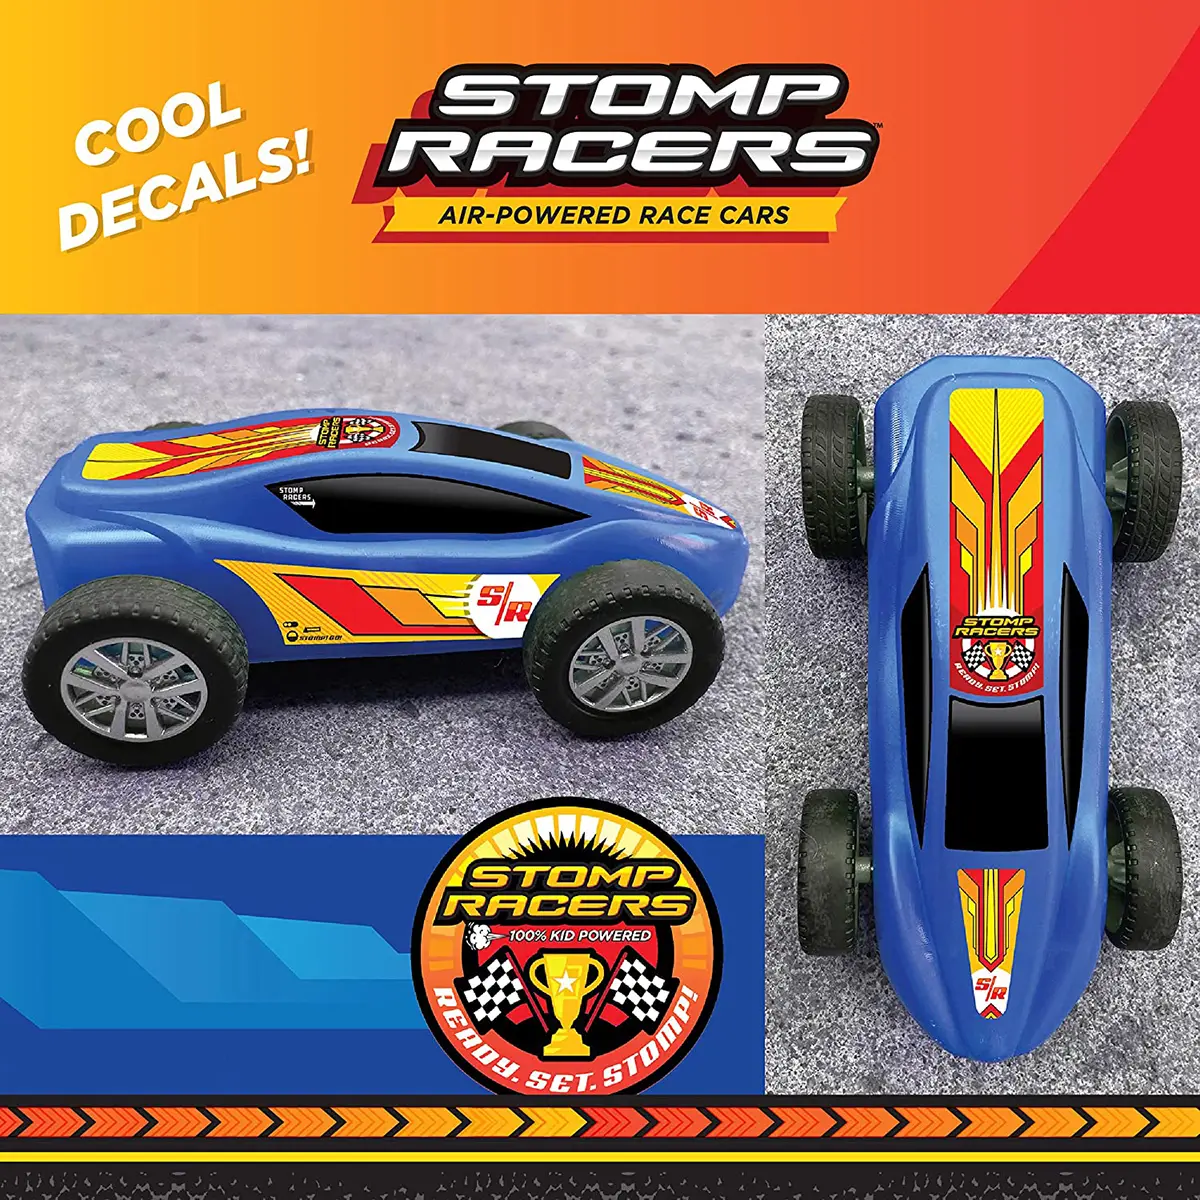 Stomp Rocket Original Stomp Racers Dueling Car Launcher For Kids of Age 5Y+, Multicolour